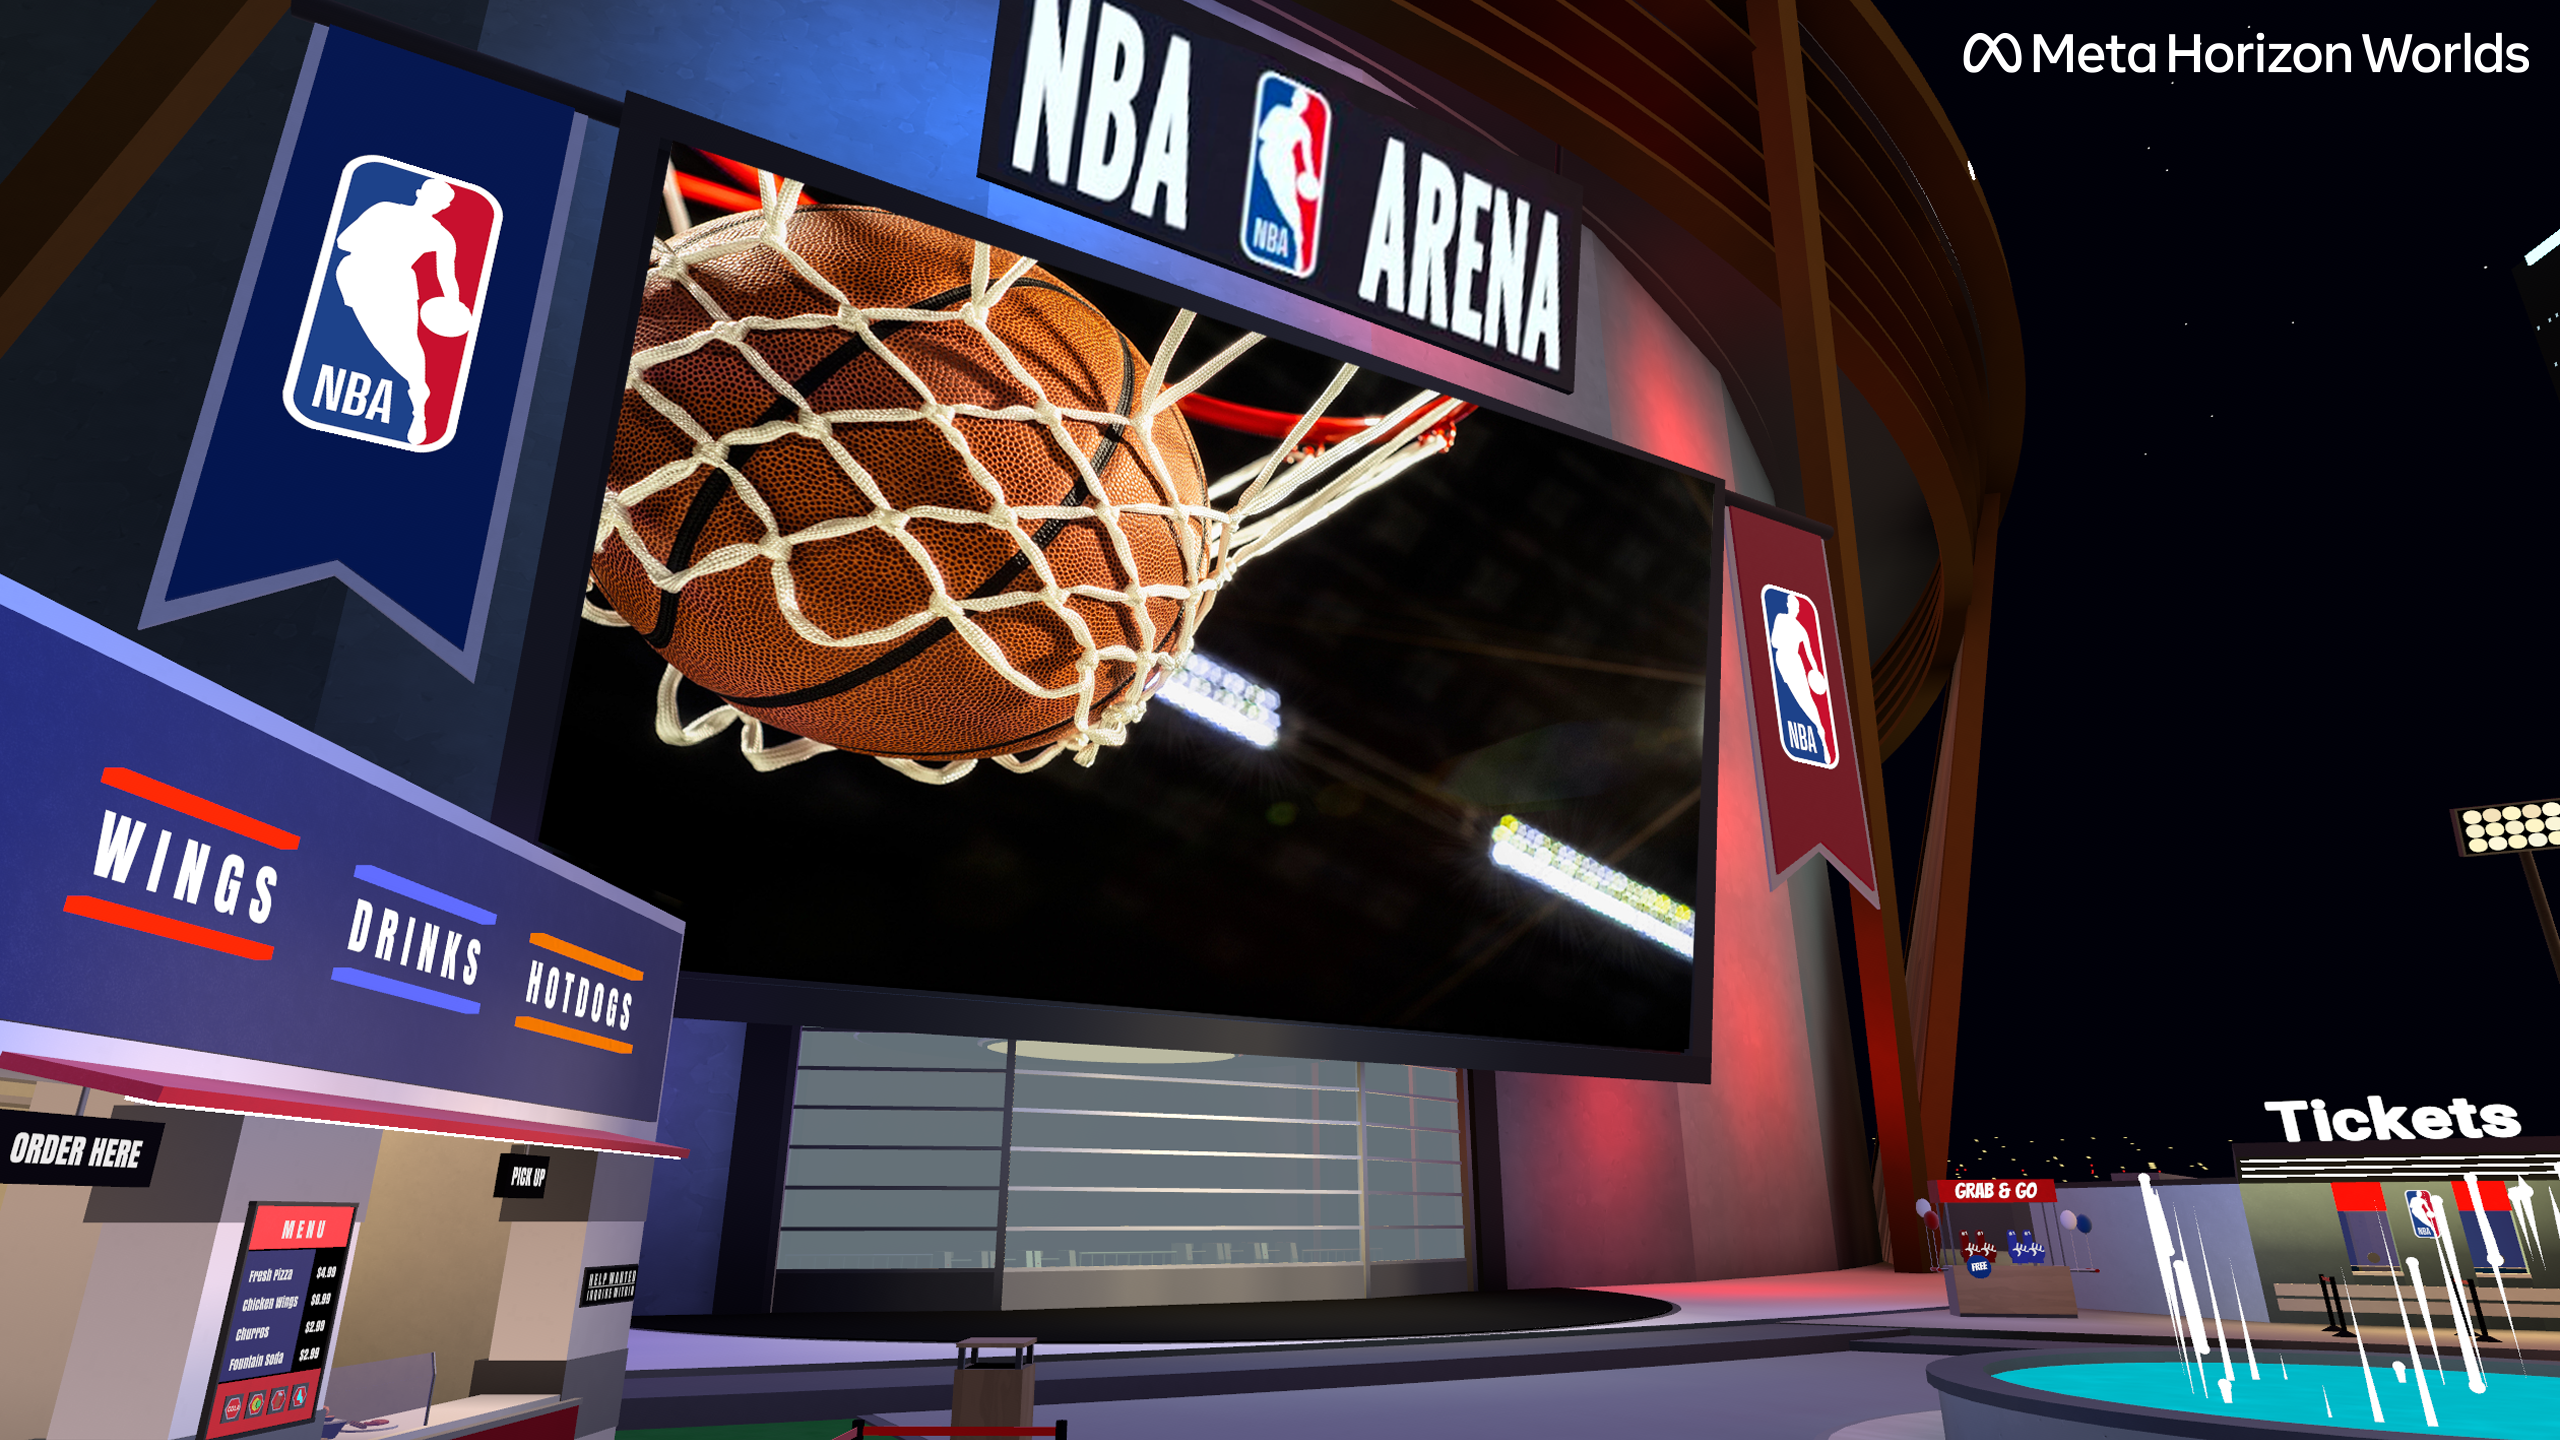 NBA, Meta Extend VR Deal as League Taps into Meta Worlds